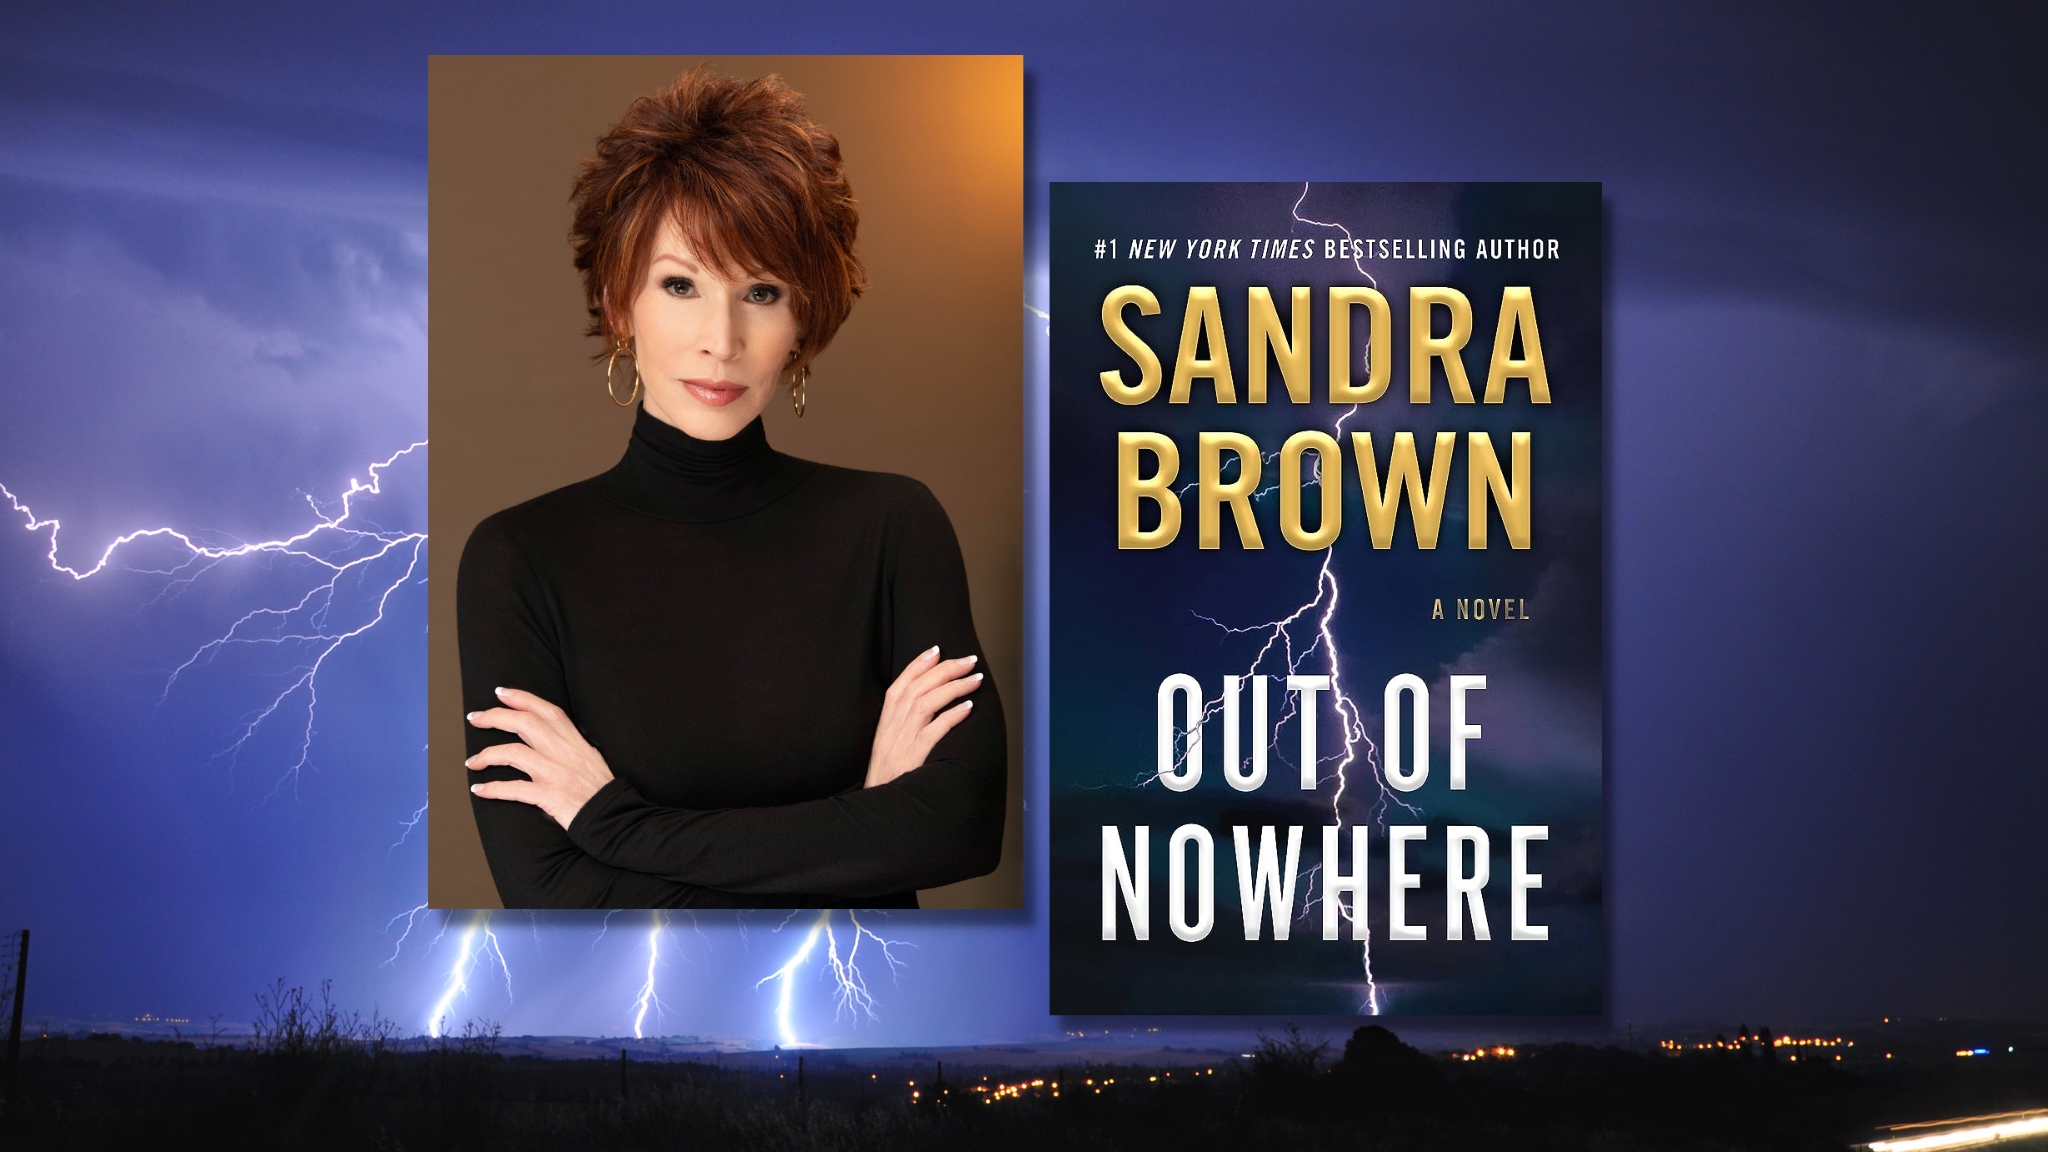 Bestseller Sandra Brown Tackles One of Society’s Biggest Tragedies in